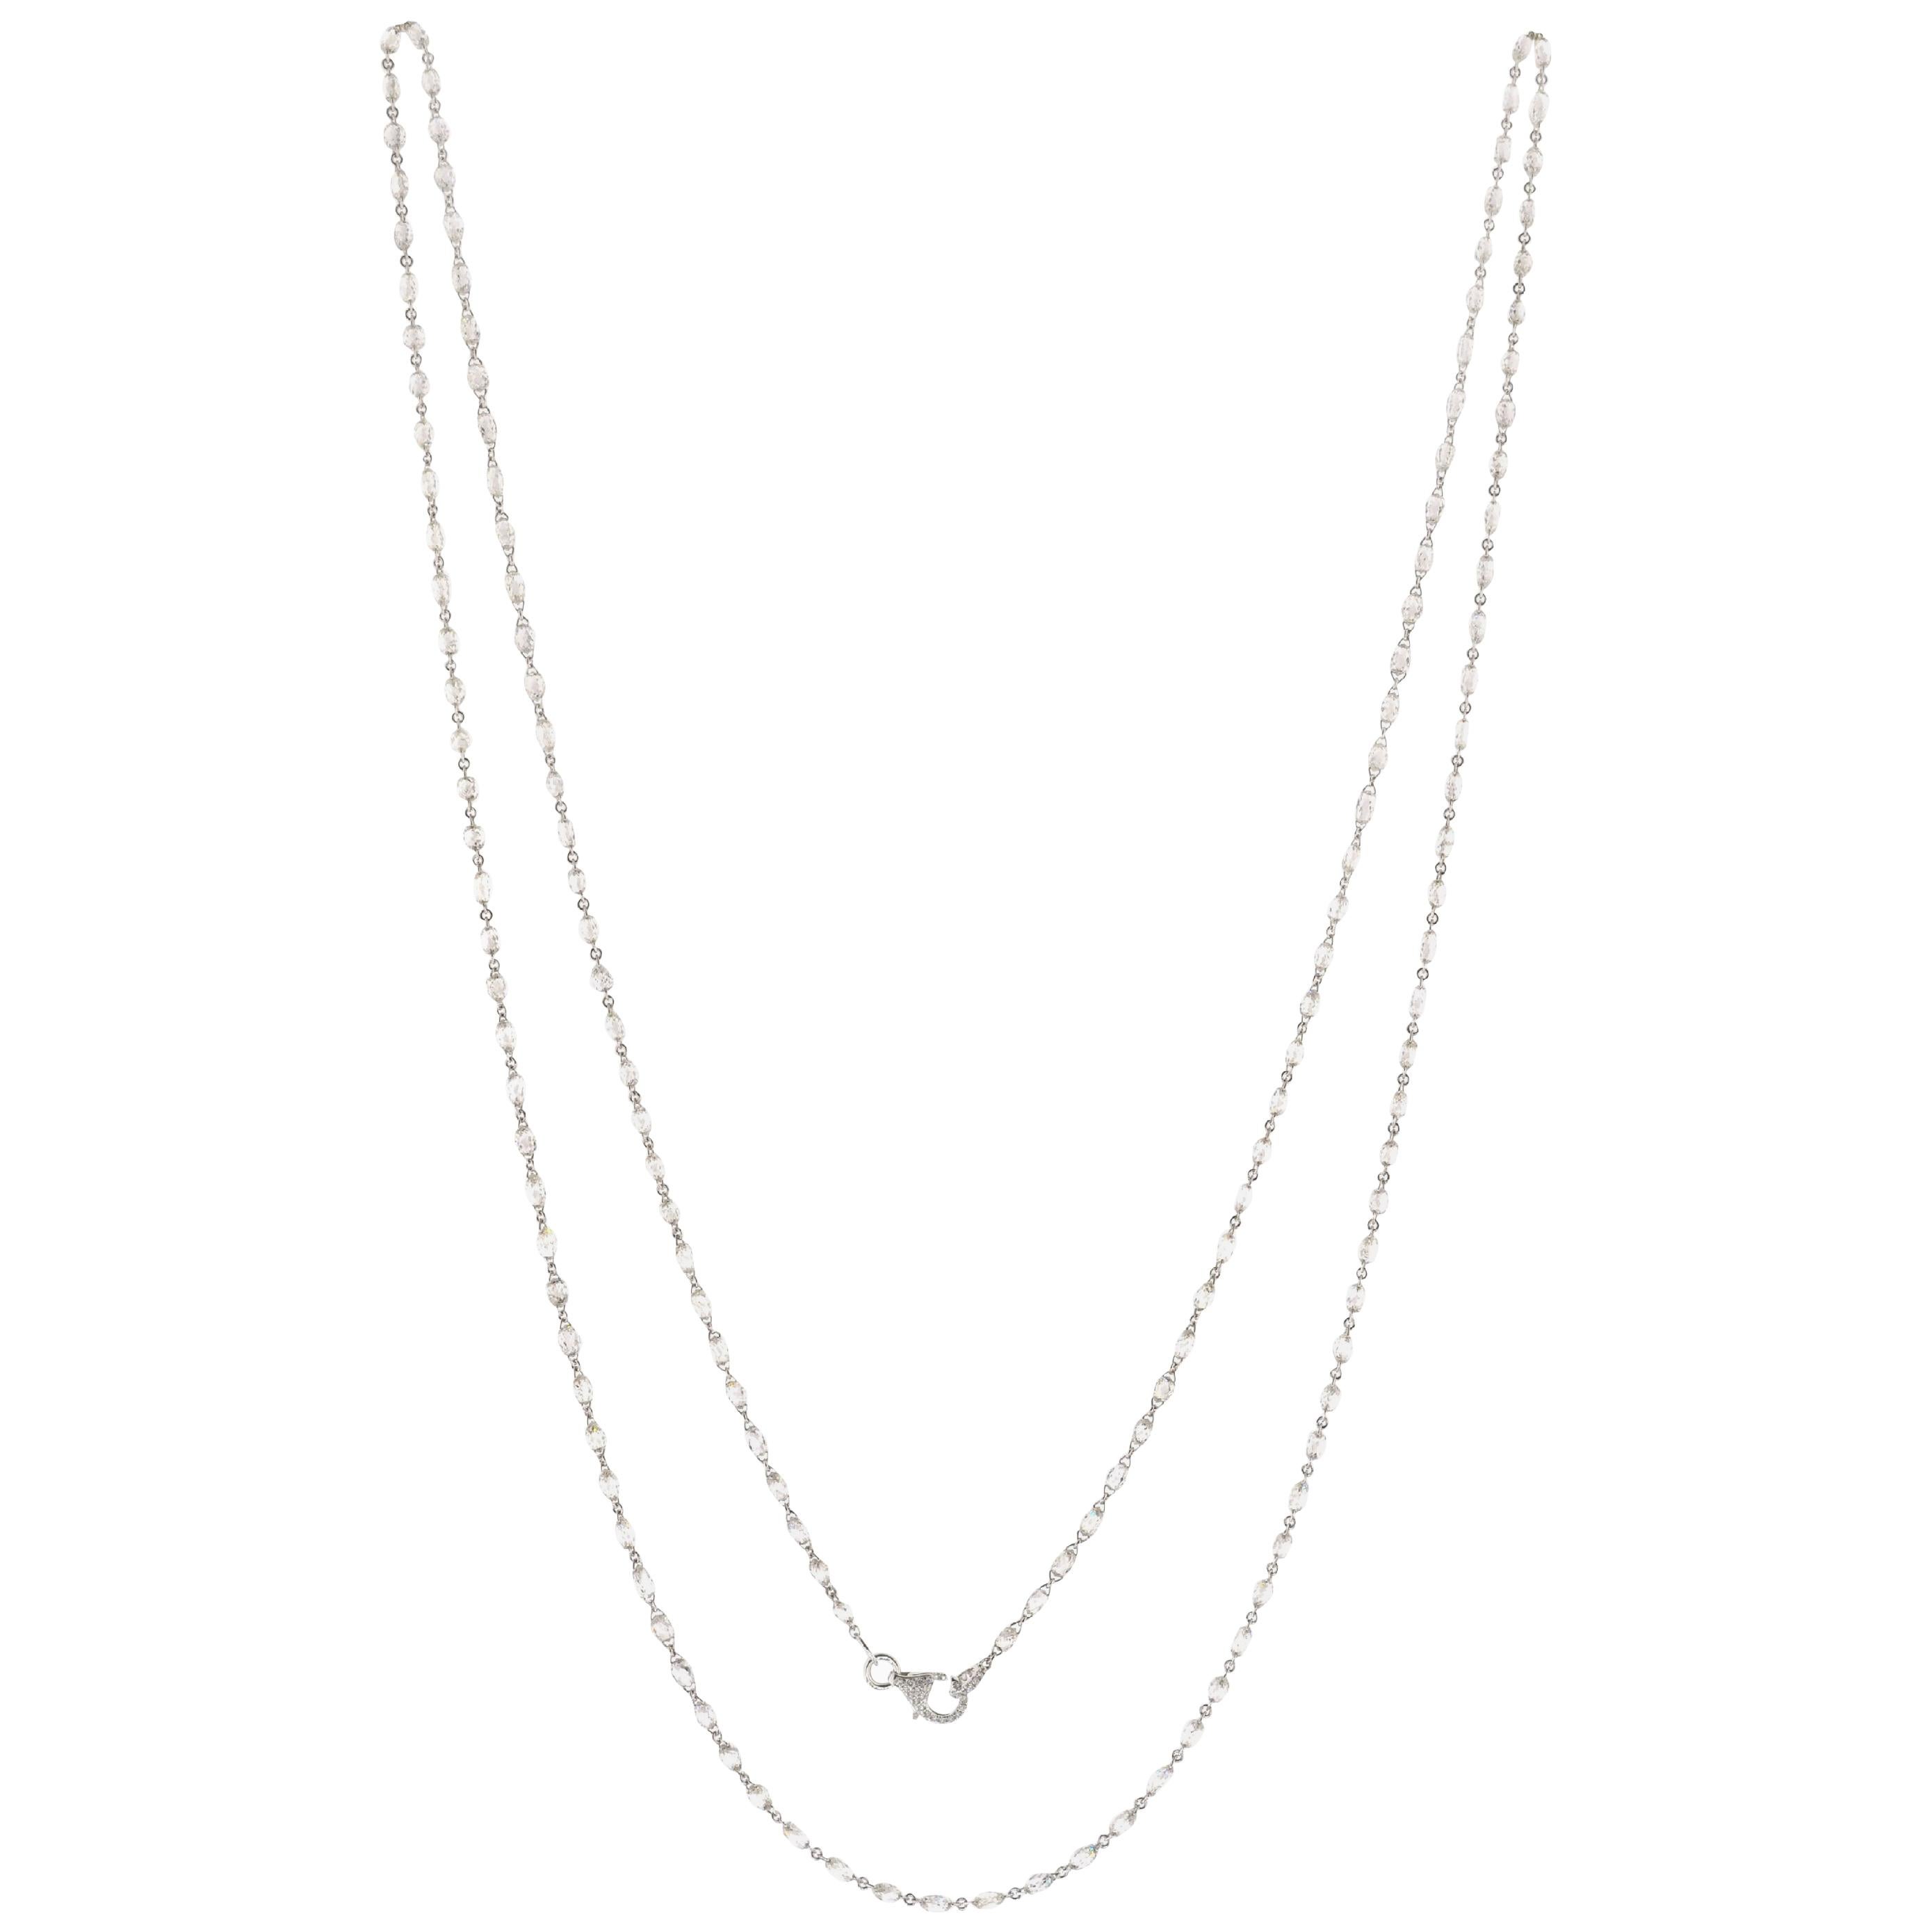 JR 27.51 Carat White Diamond Briolette Necklace 18 Karat White Gold